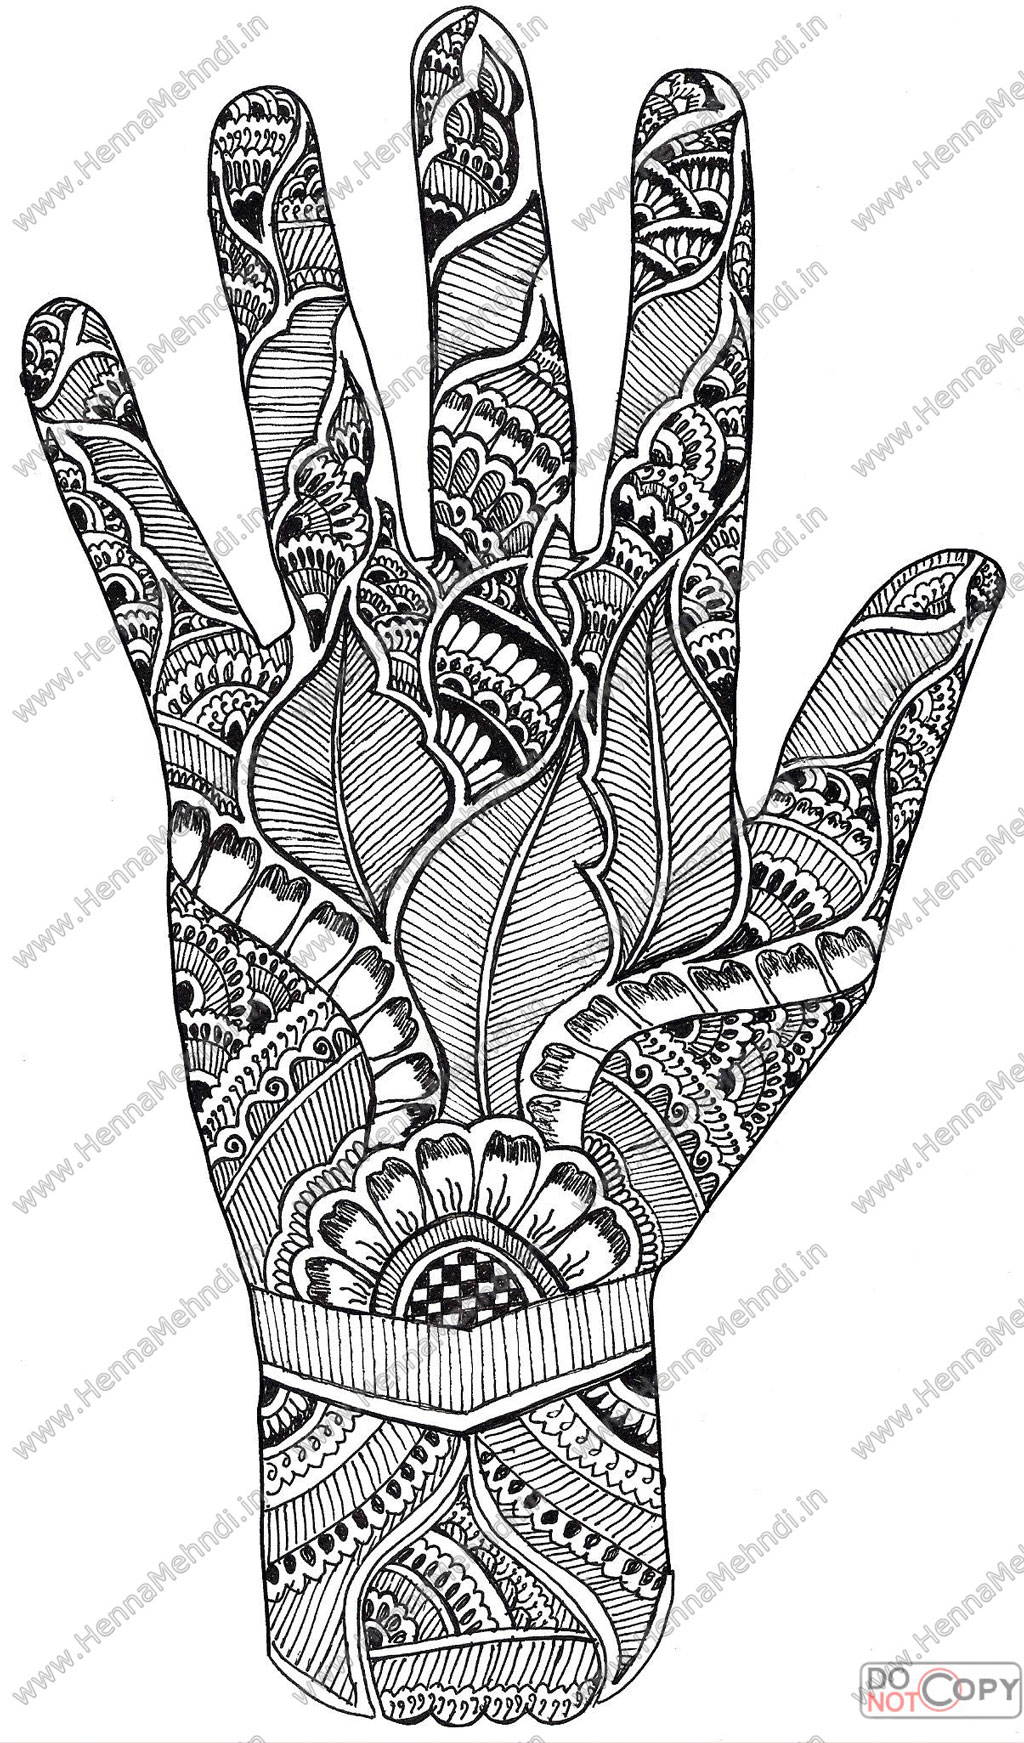 Henna Mehndi Designs-3 by hinasabreen on DeviantArt